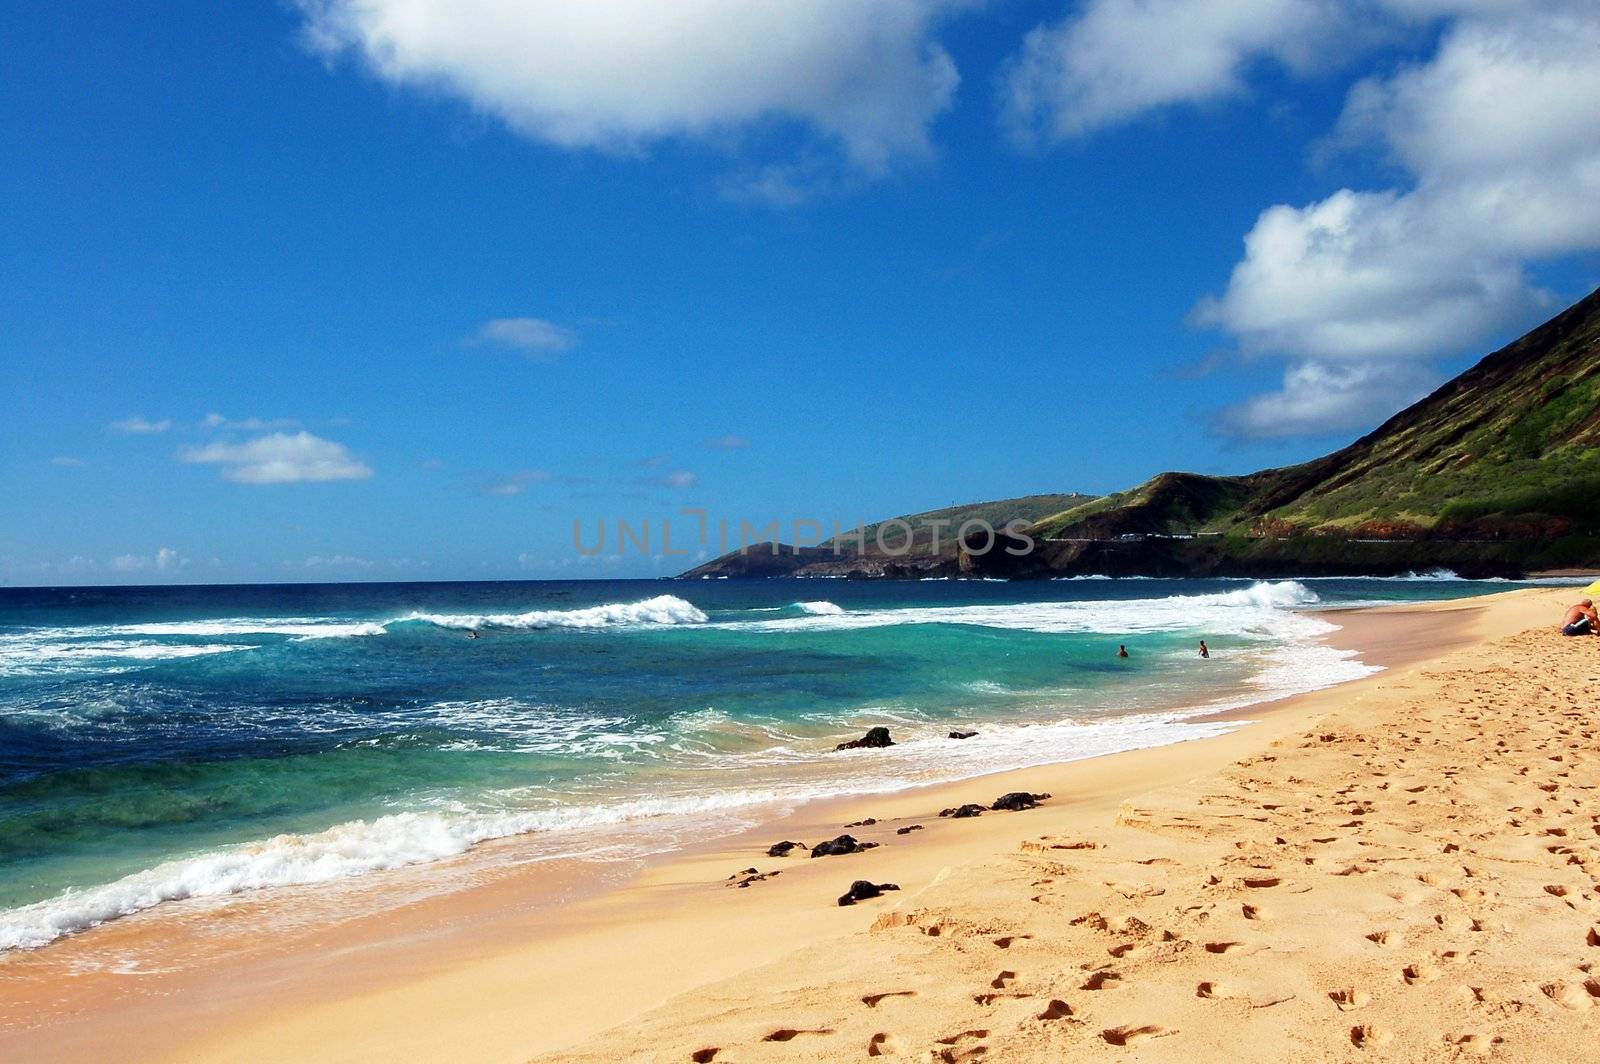 scenic view of the sandy beach in Honolulu Hawaii USA